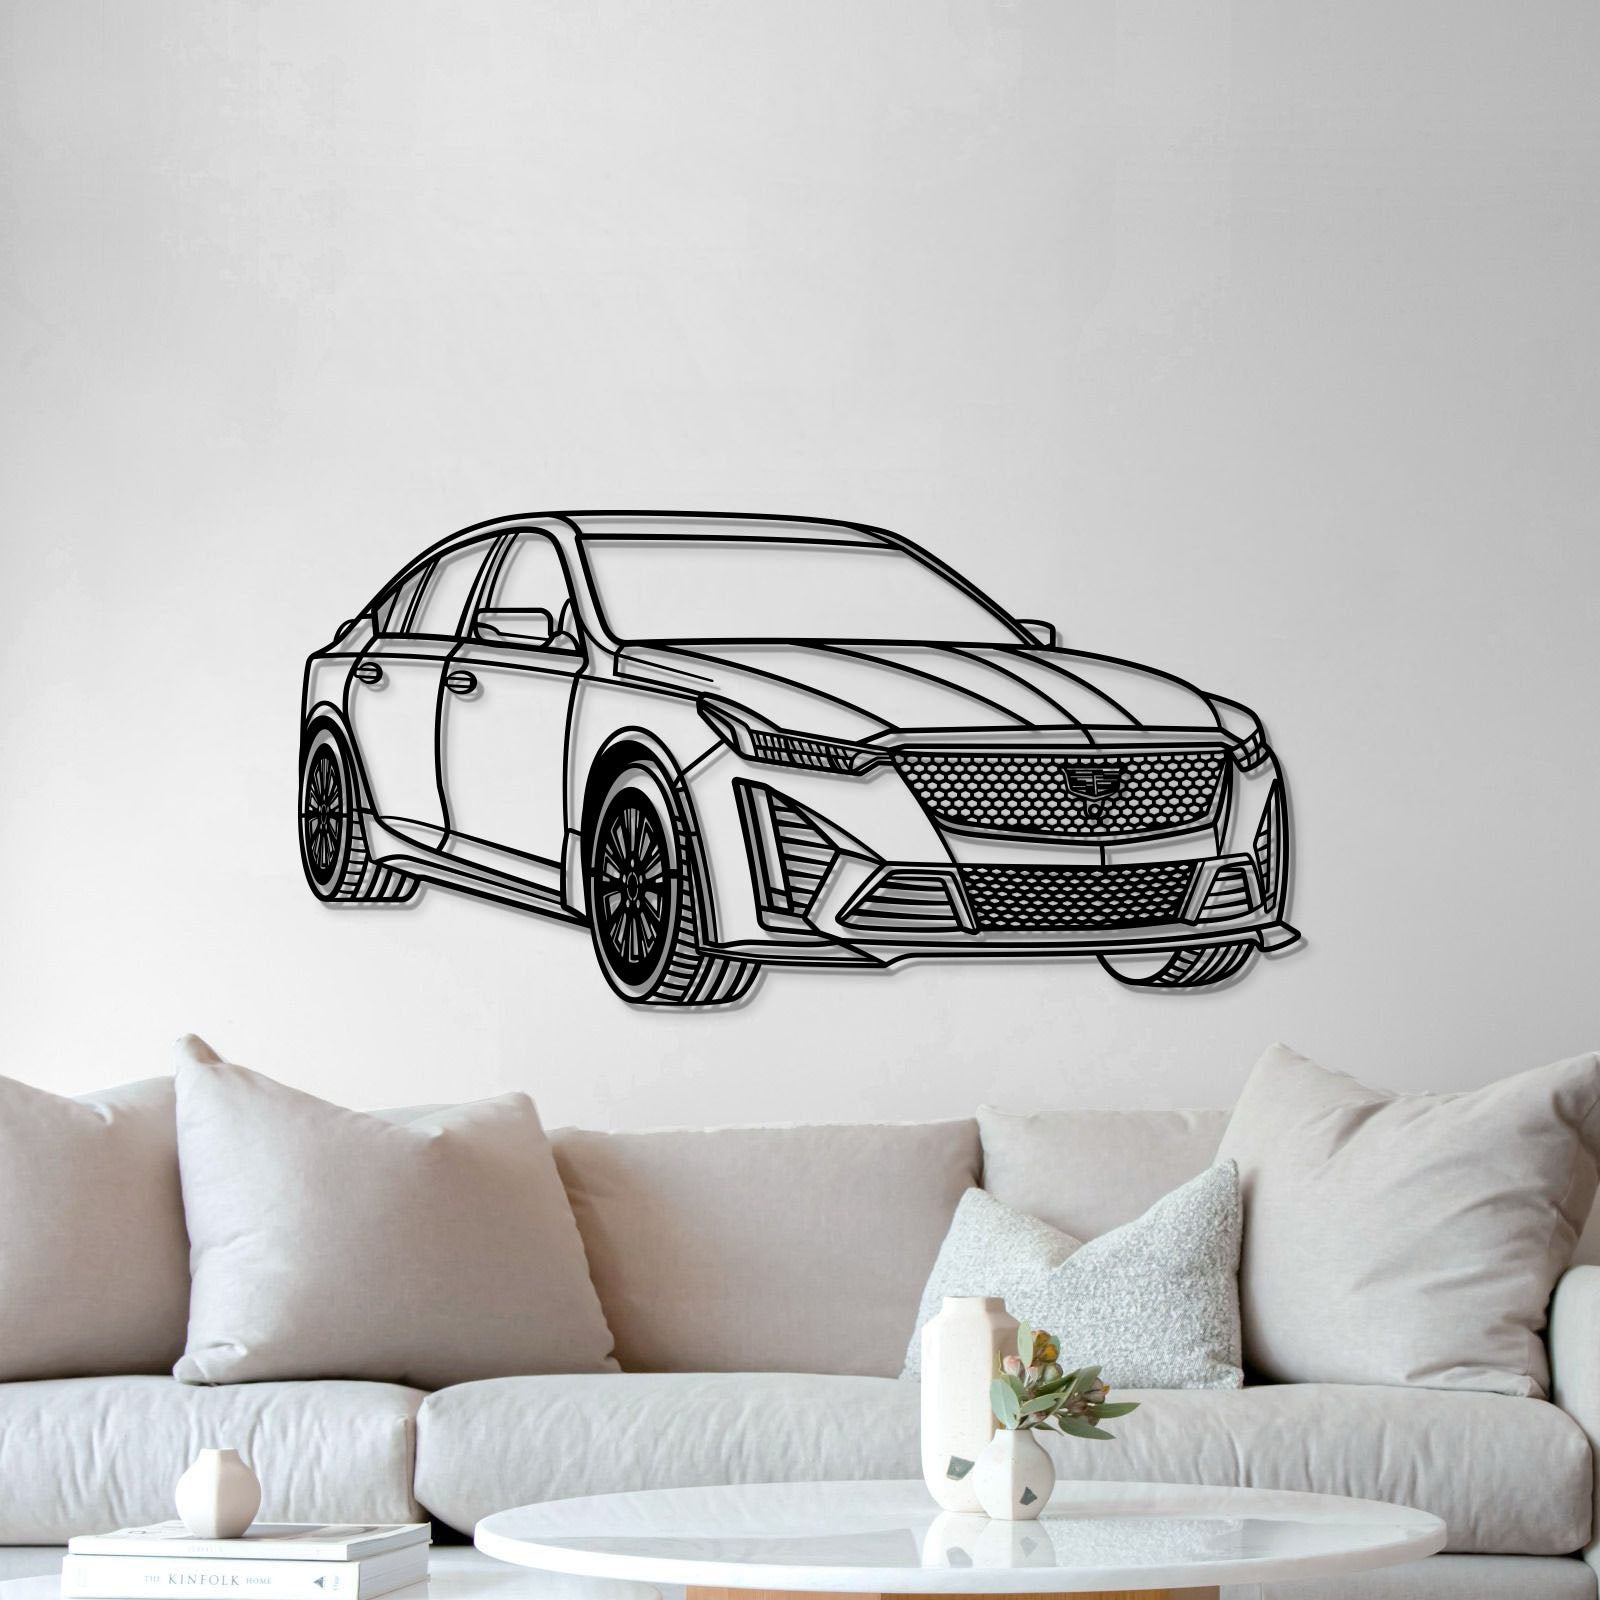 2023 CT5-V Blackwing Perspective Metal Car Wall Art - MT1146